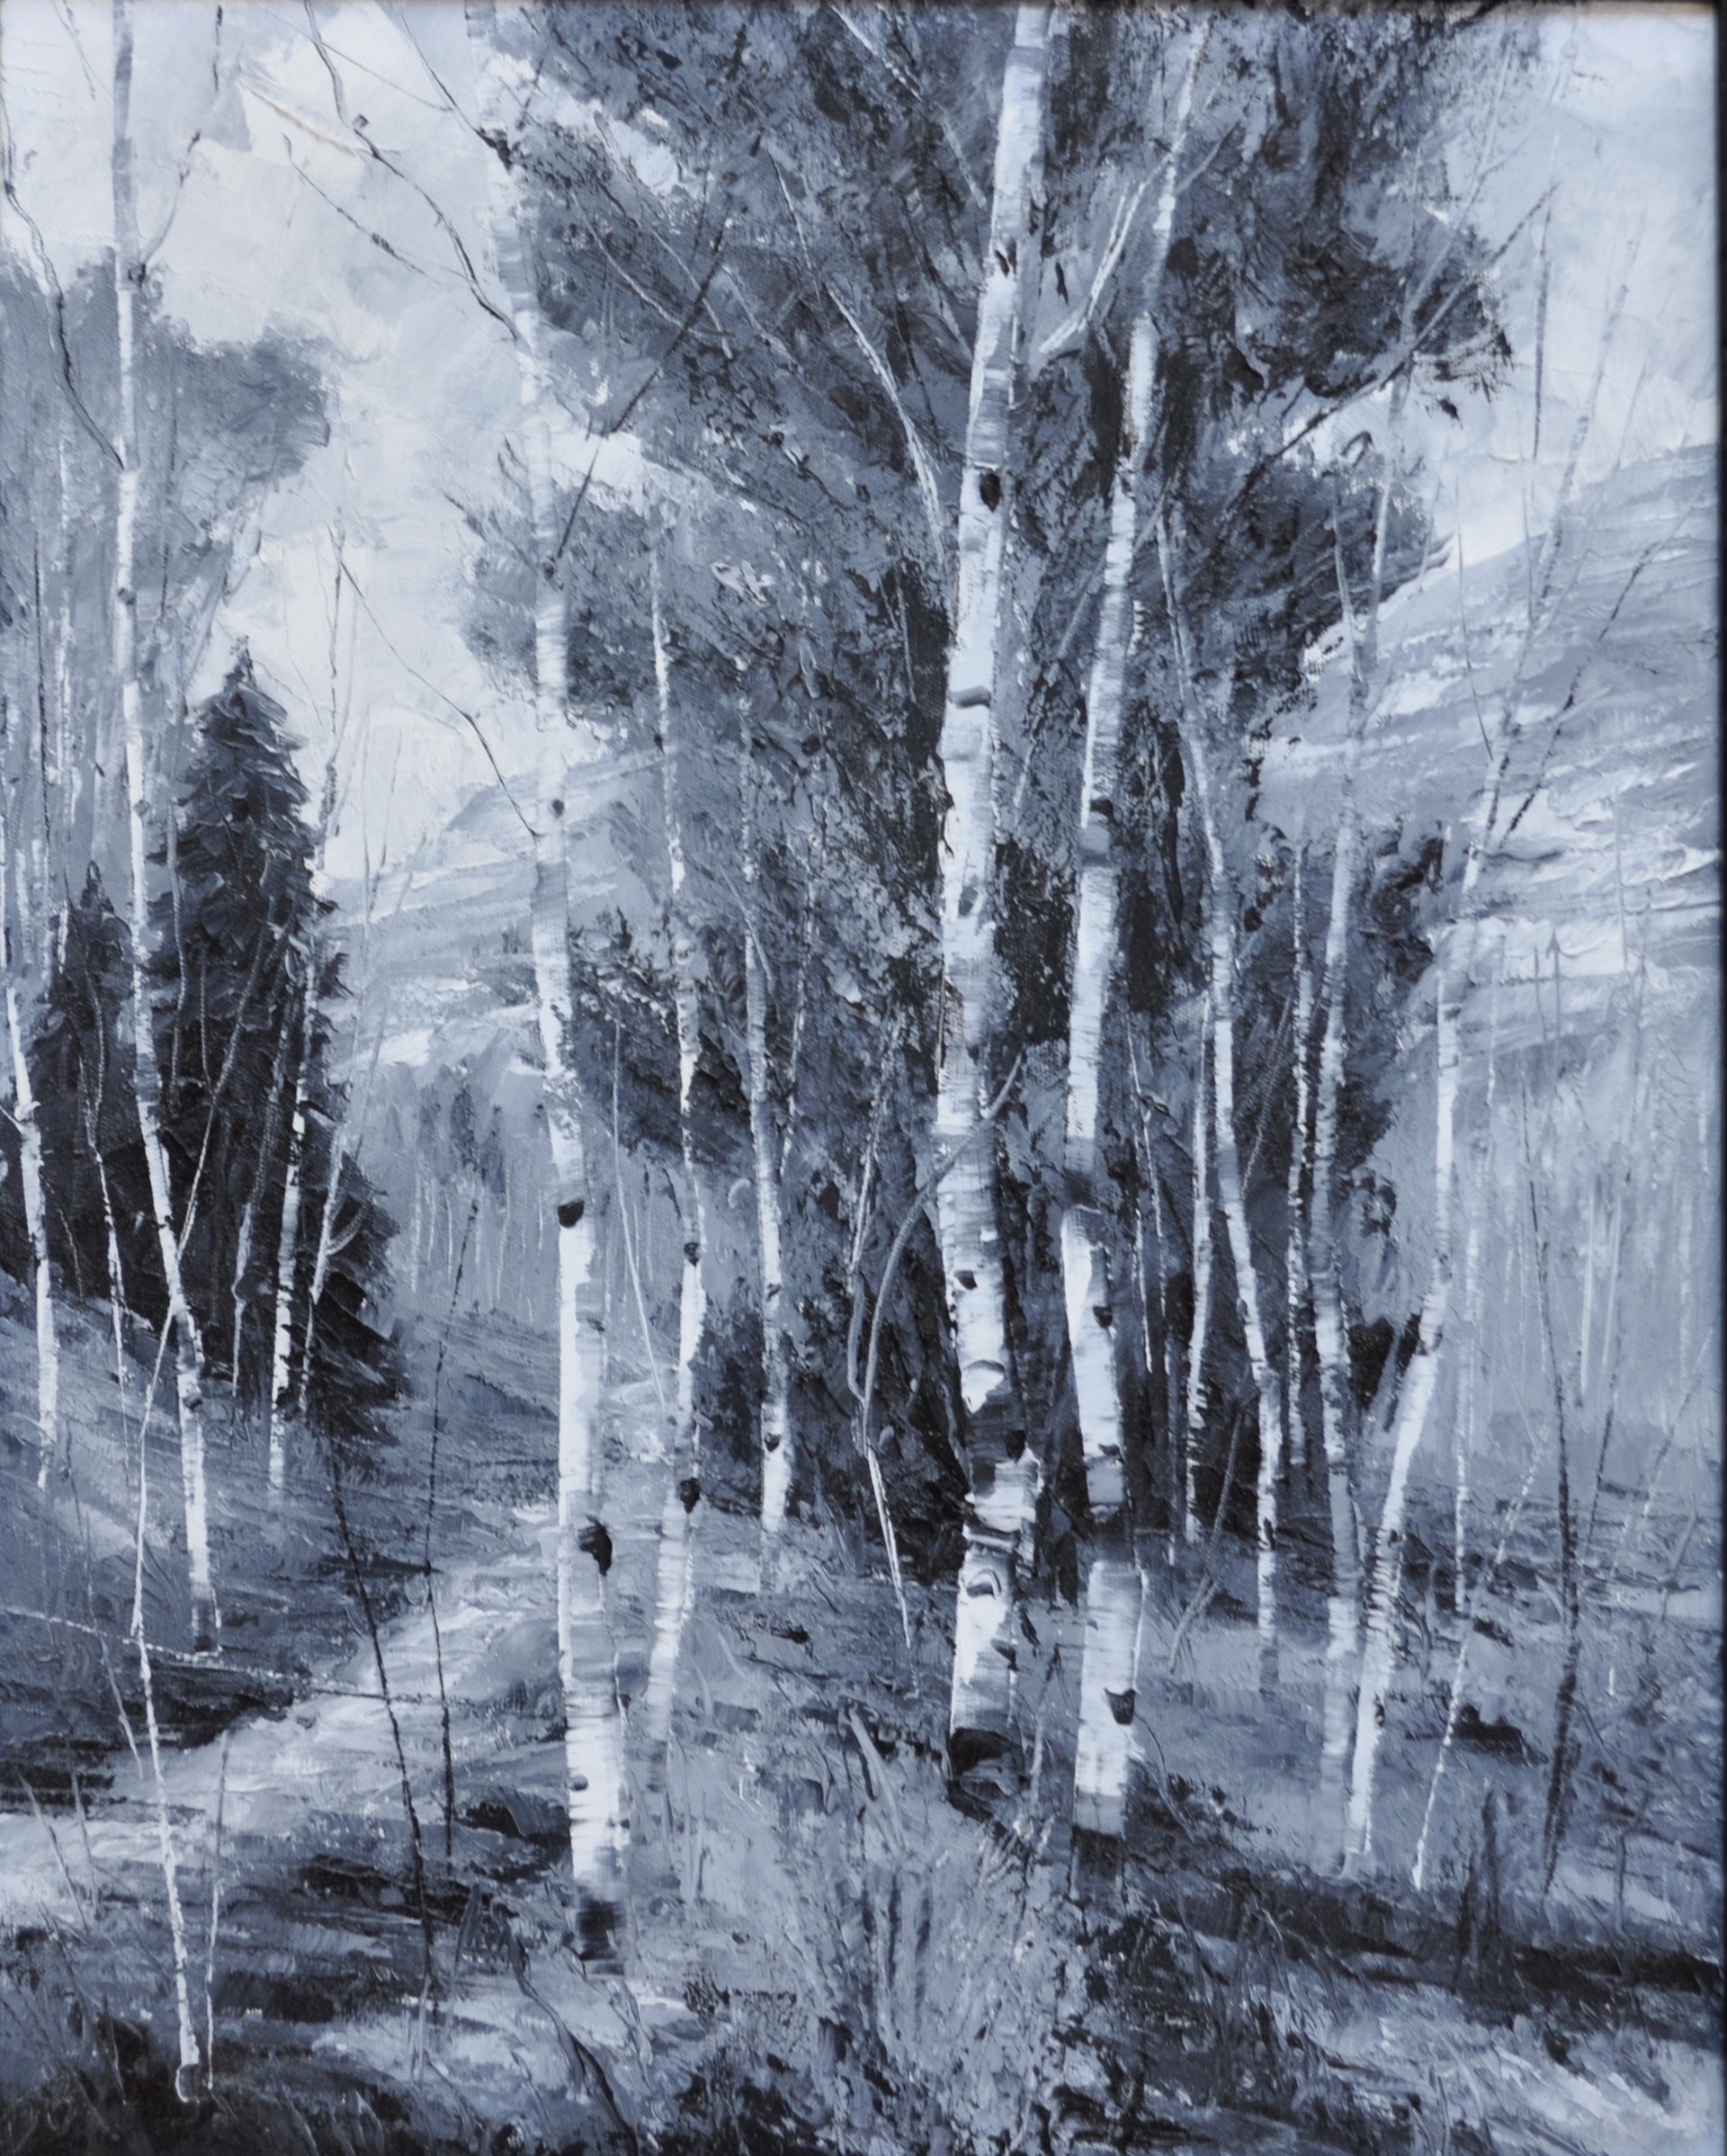 Forest Study in Black & White by Dean Bradshaw